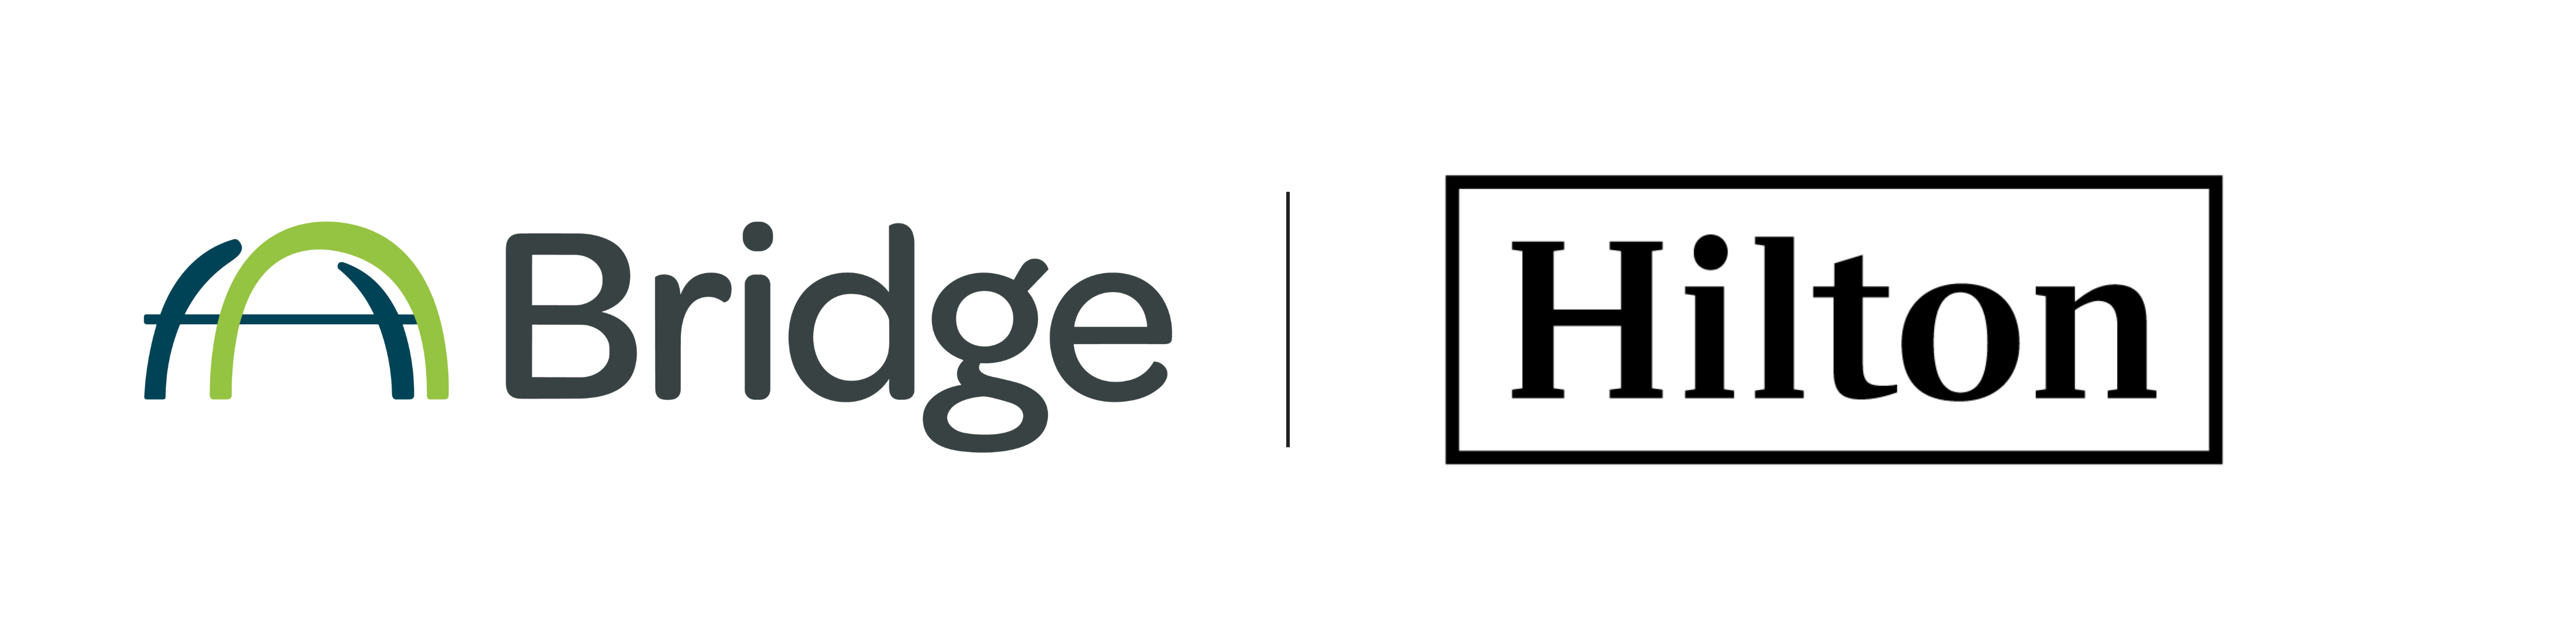 Hilton & Bridge Partner to Help Facilitate Hotel Ownership